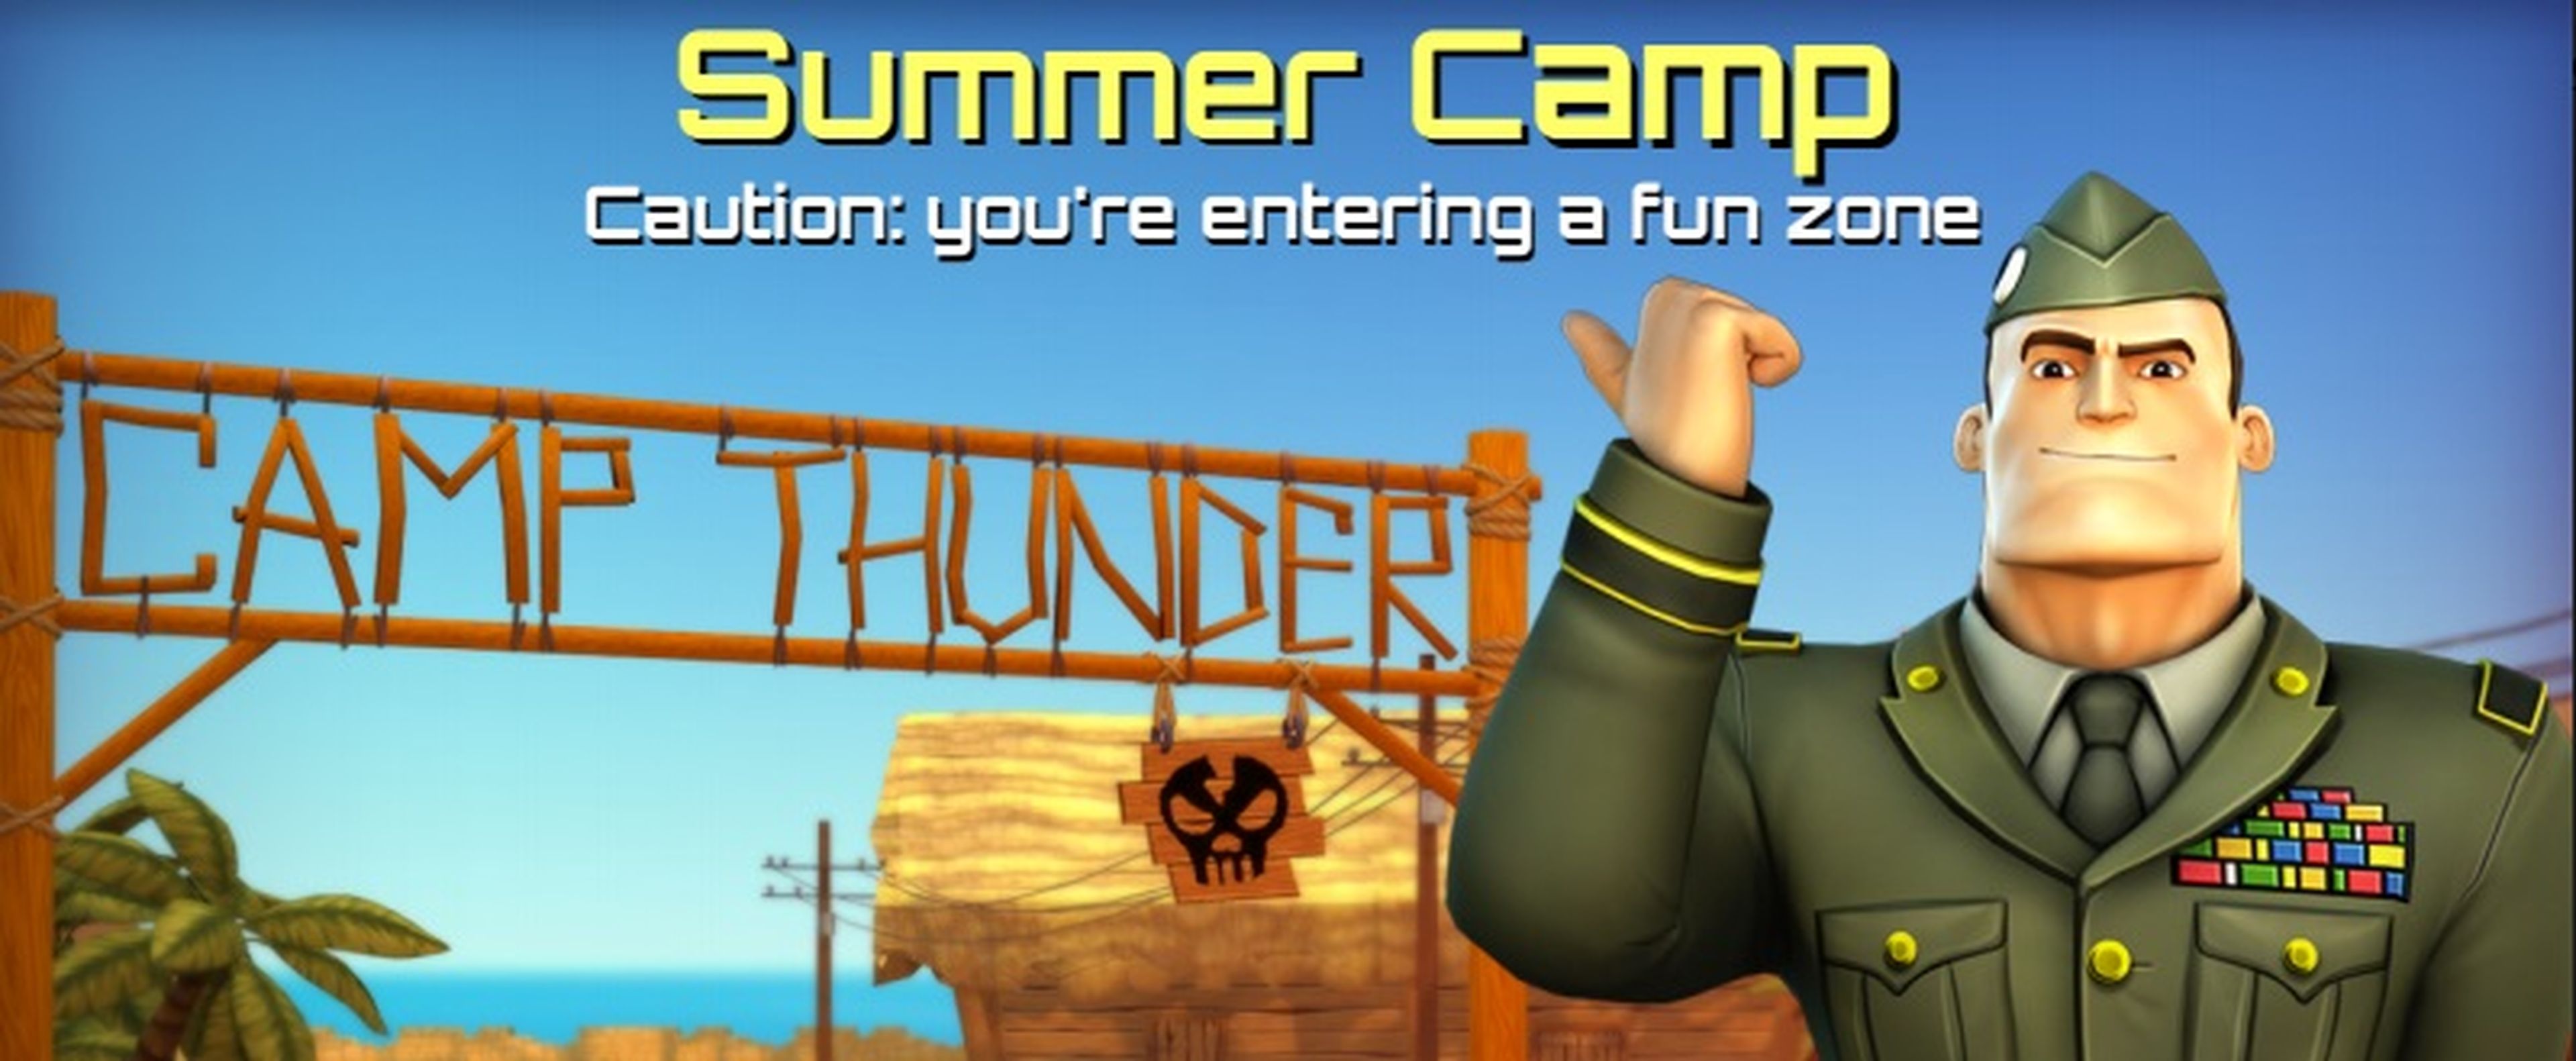 Summer Camp Respawnables